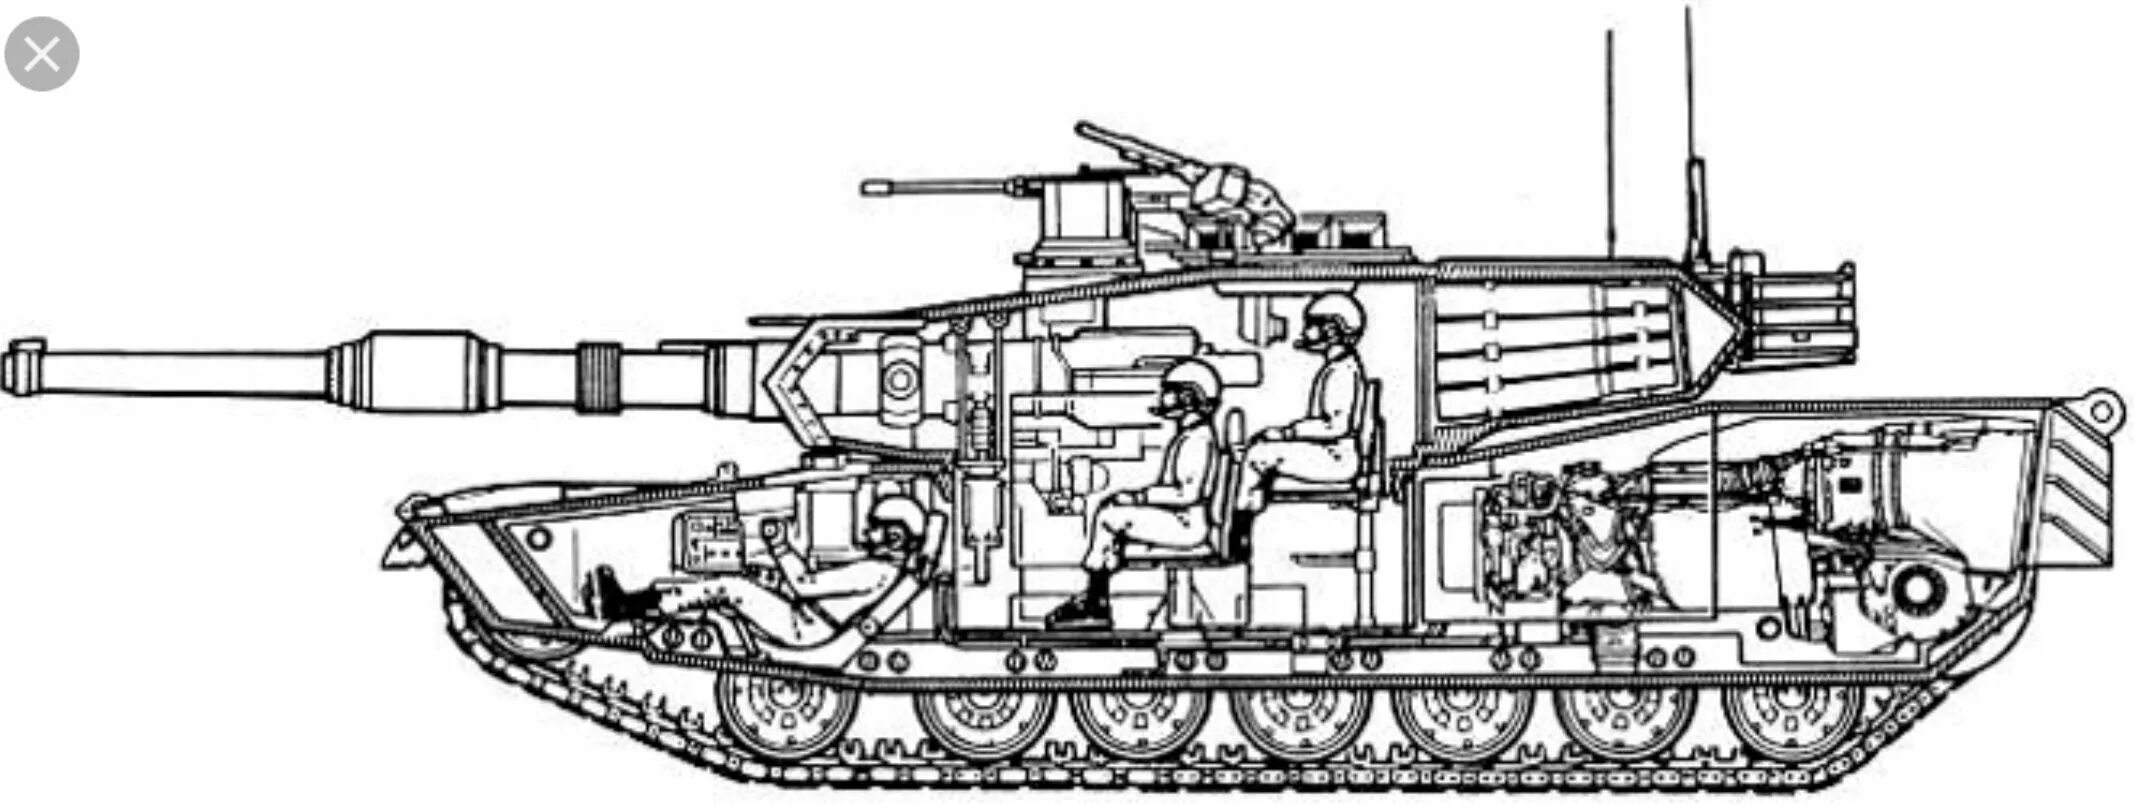 Снизу м 1. Схема танка Абрамс м1. Танк м1 Абрамс чертежи. М1 Абрамс в разрезе. М1 Абрамс чертеж.